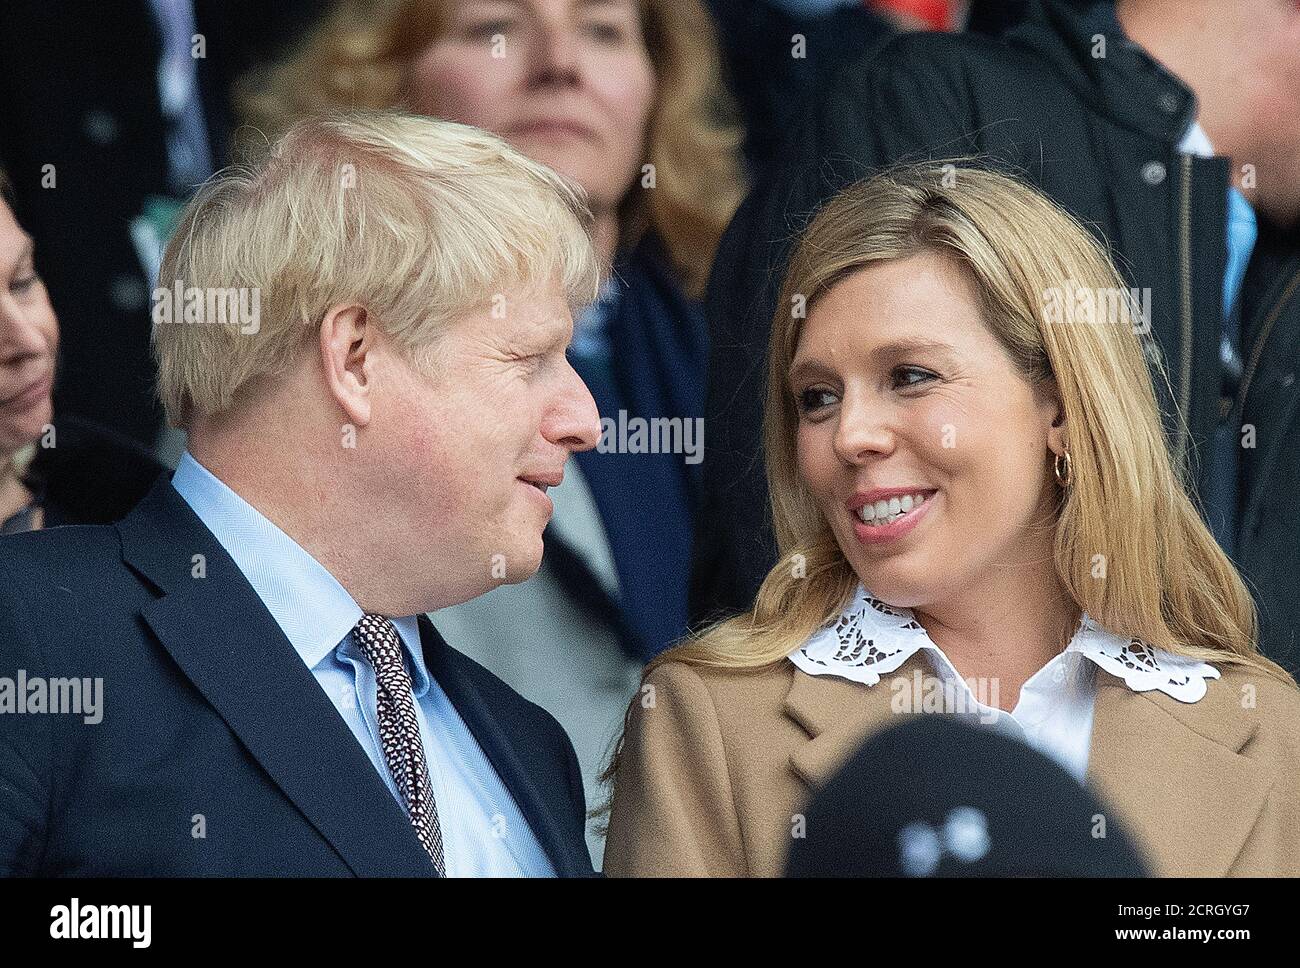 Prime Minister Boris Johnson and fiance Carrie Symonds at Twickenham. England v Wales. 7/3/2020.  PHOTO CREDIT : © MARK PAIN / ALAMY STOCK PHOTO Stock Photo